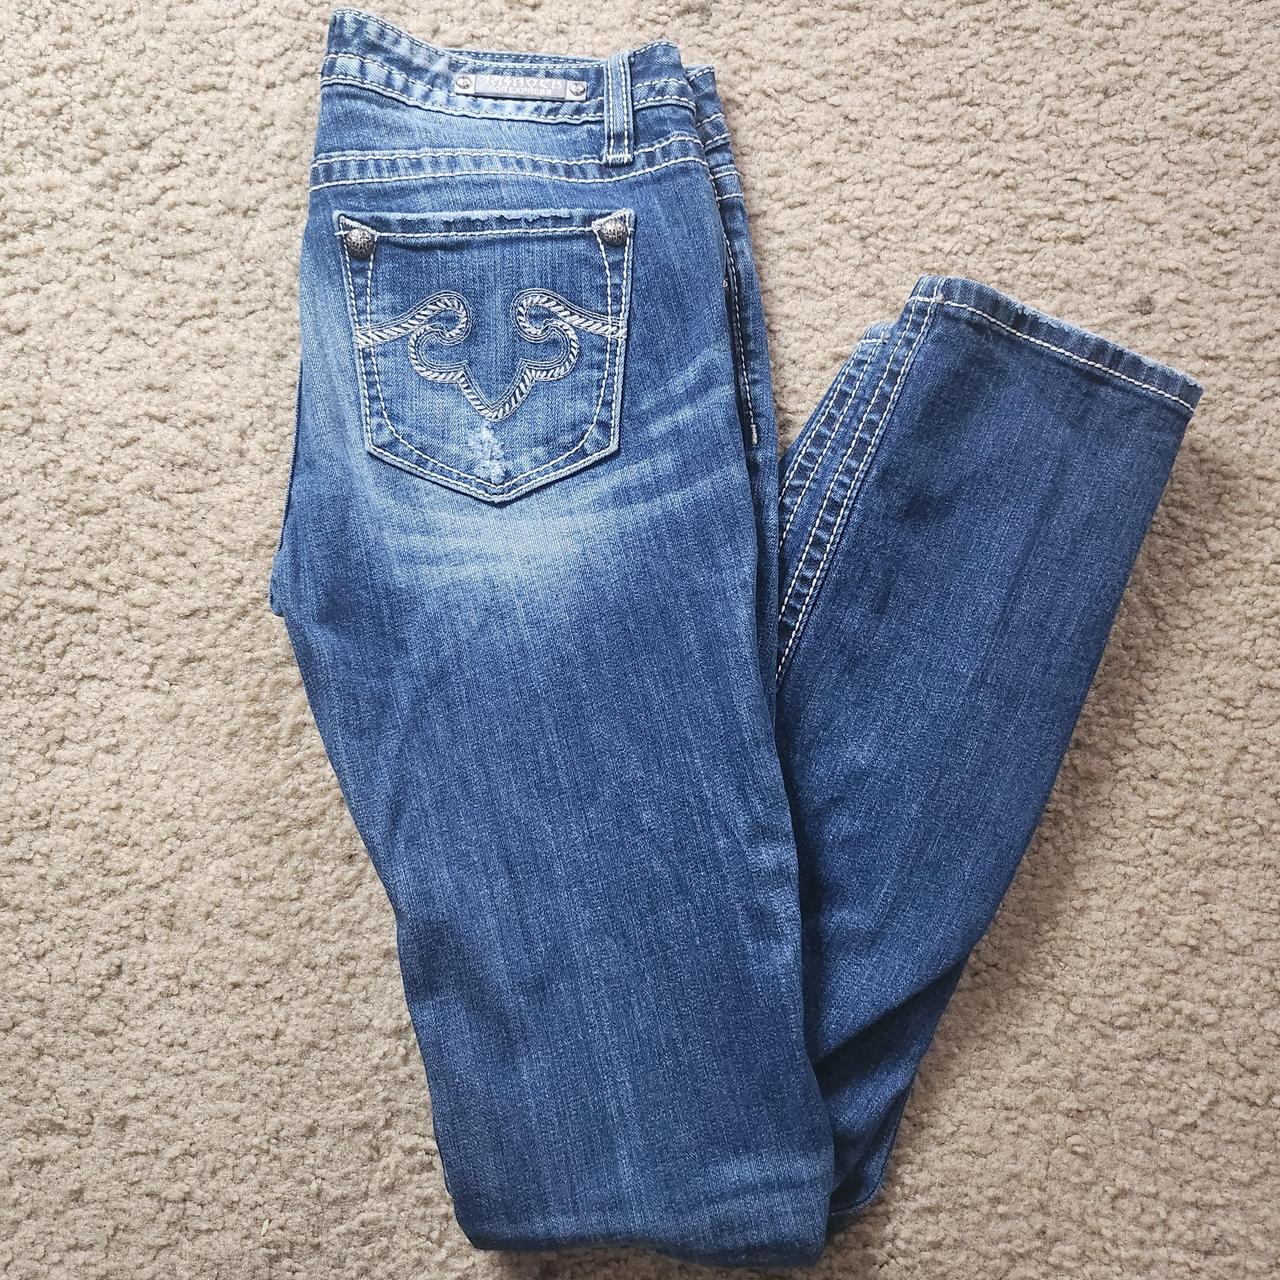 Contrast Distressed Rerock Jeans, Size: 6R